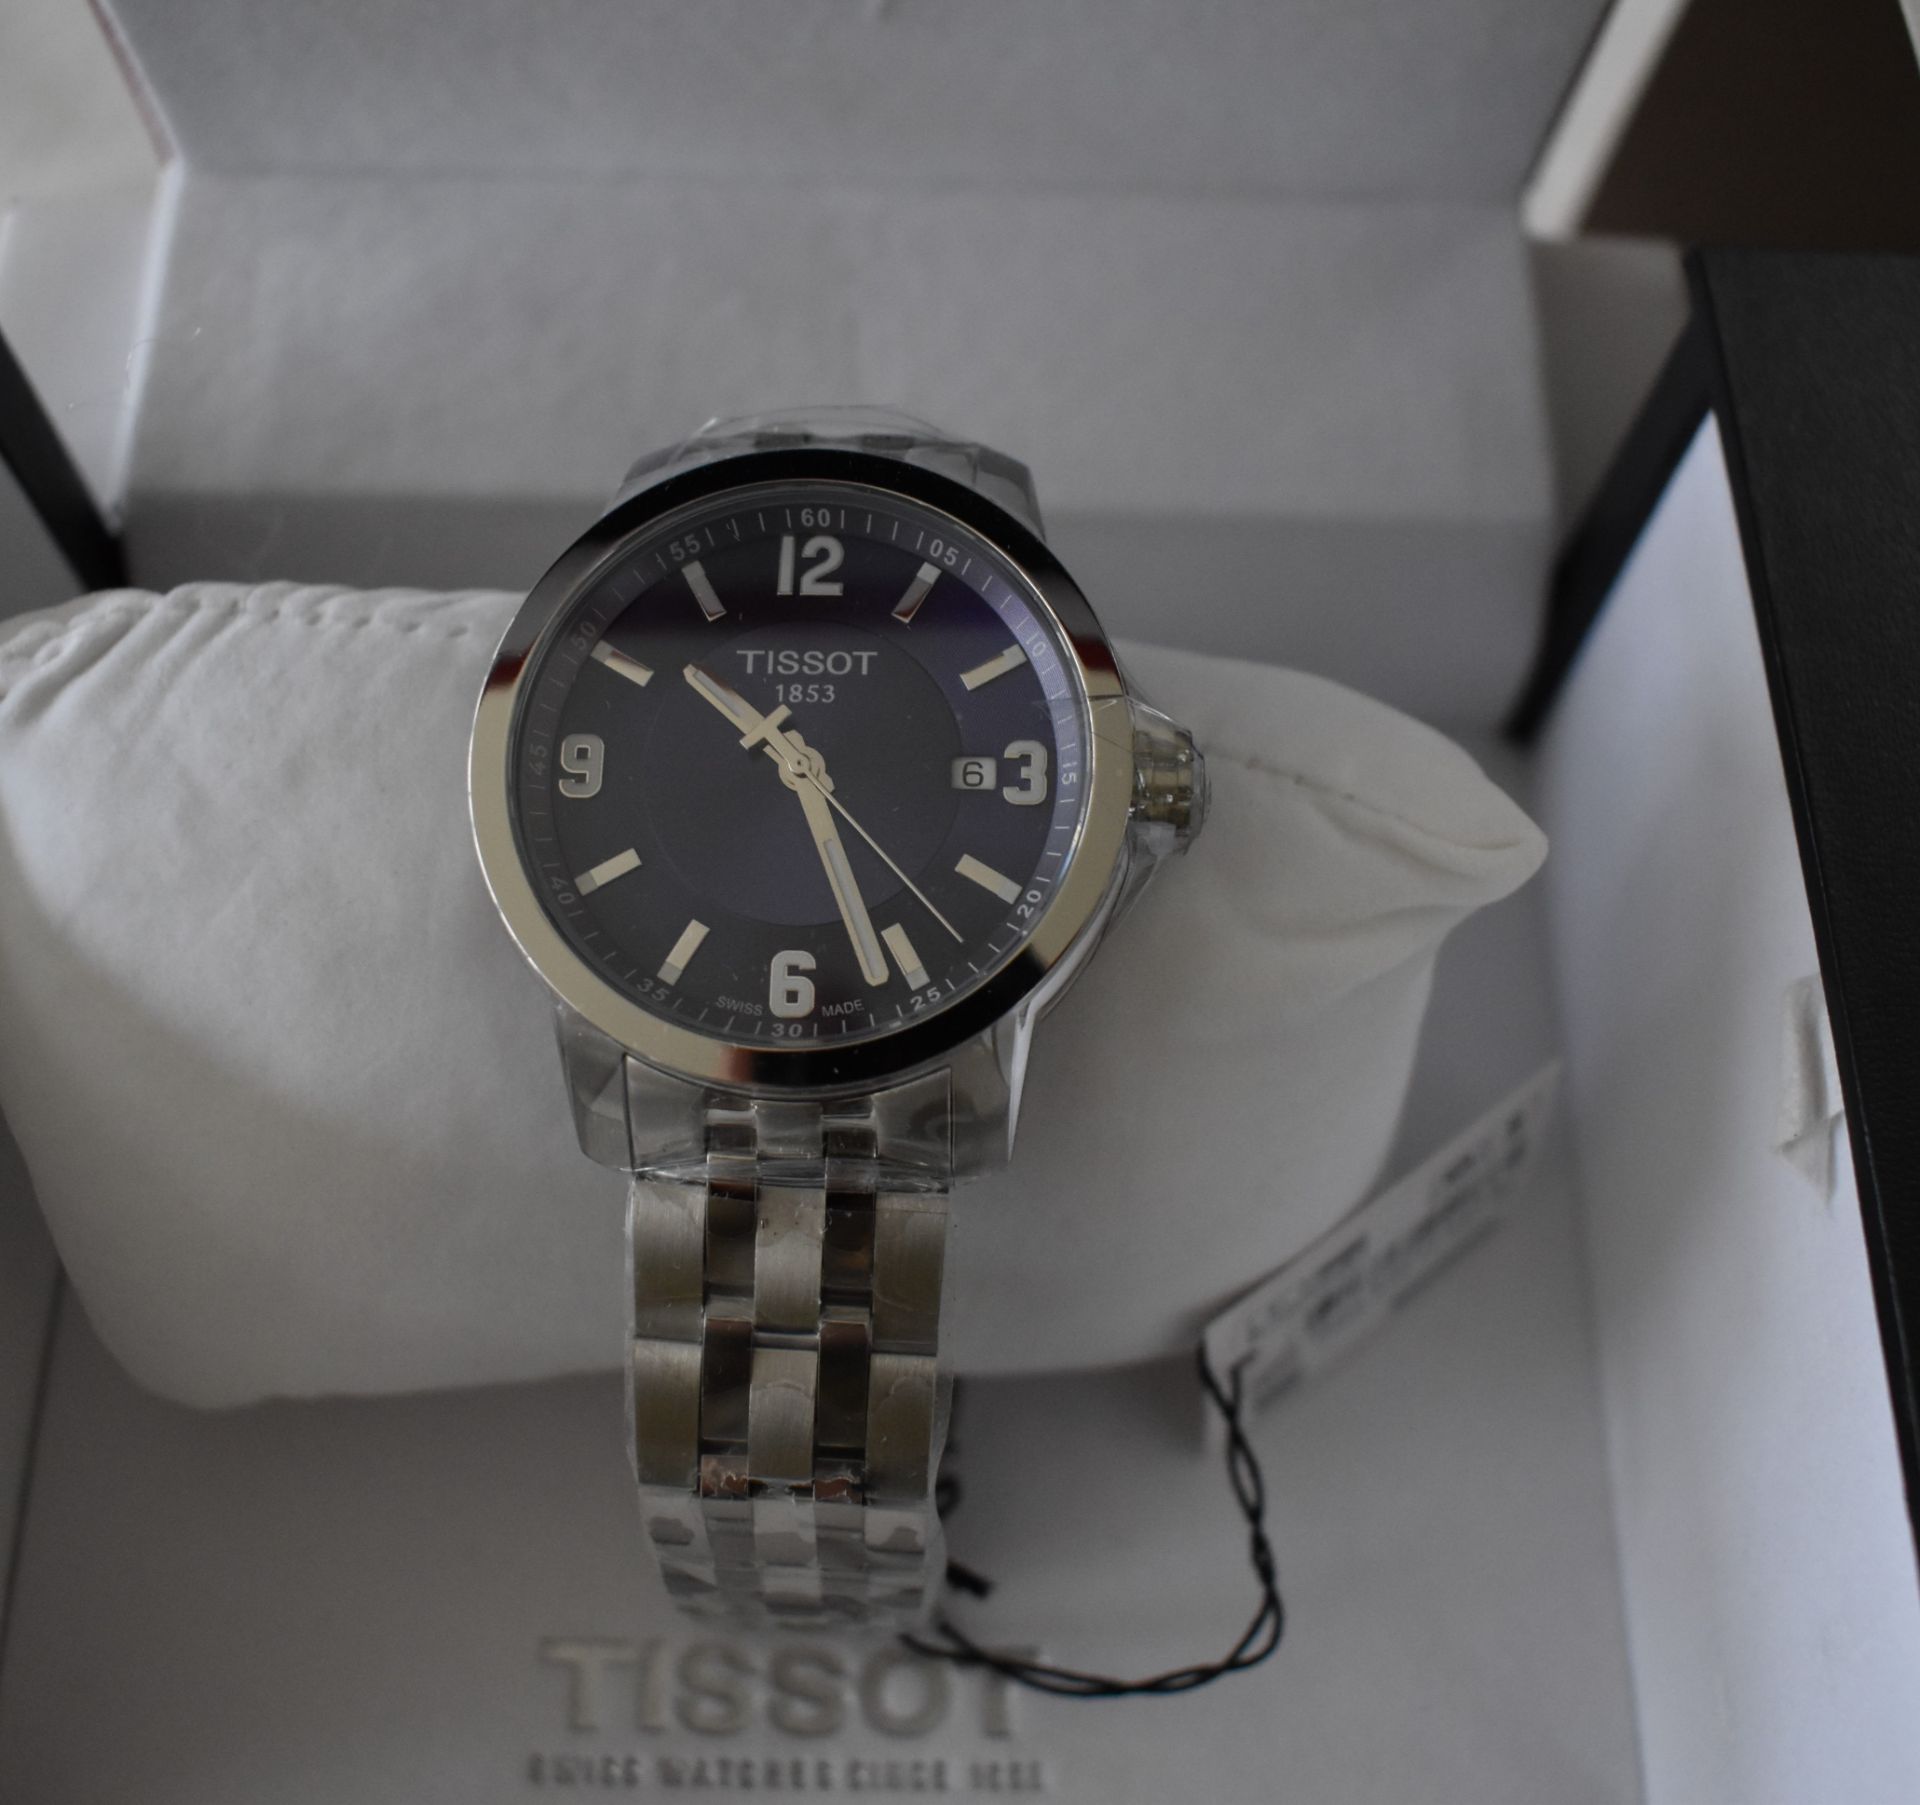 Tissot Men's Watch TO55.410.11.047.00 - Image 3 of 3